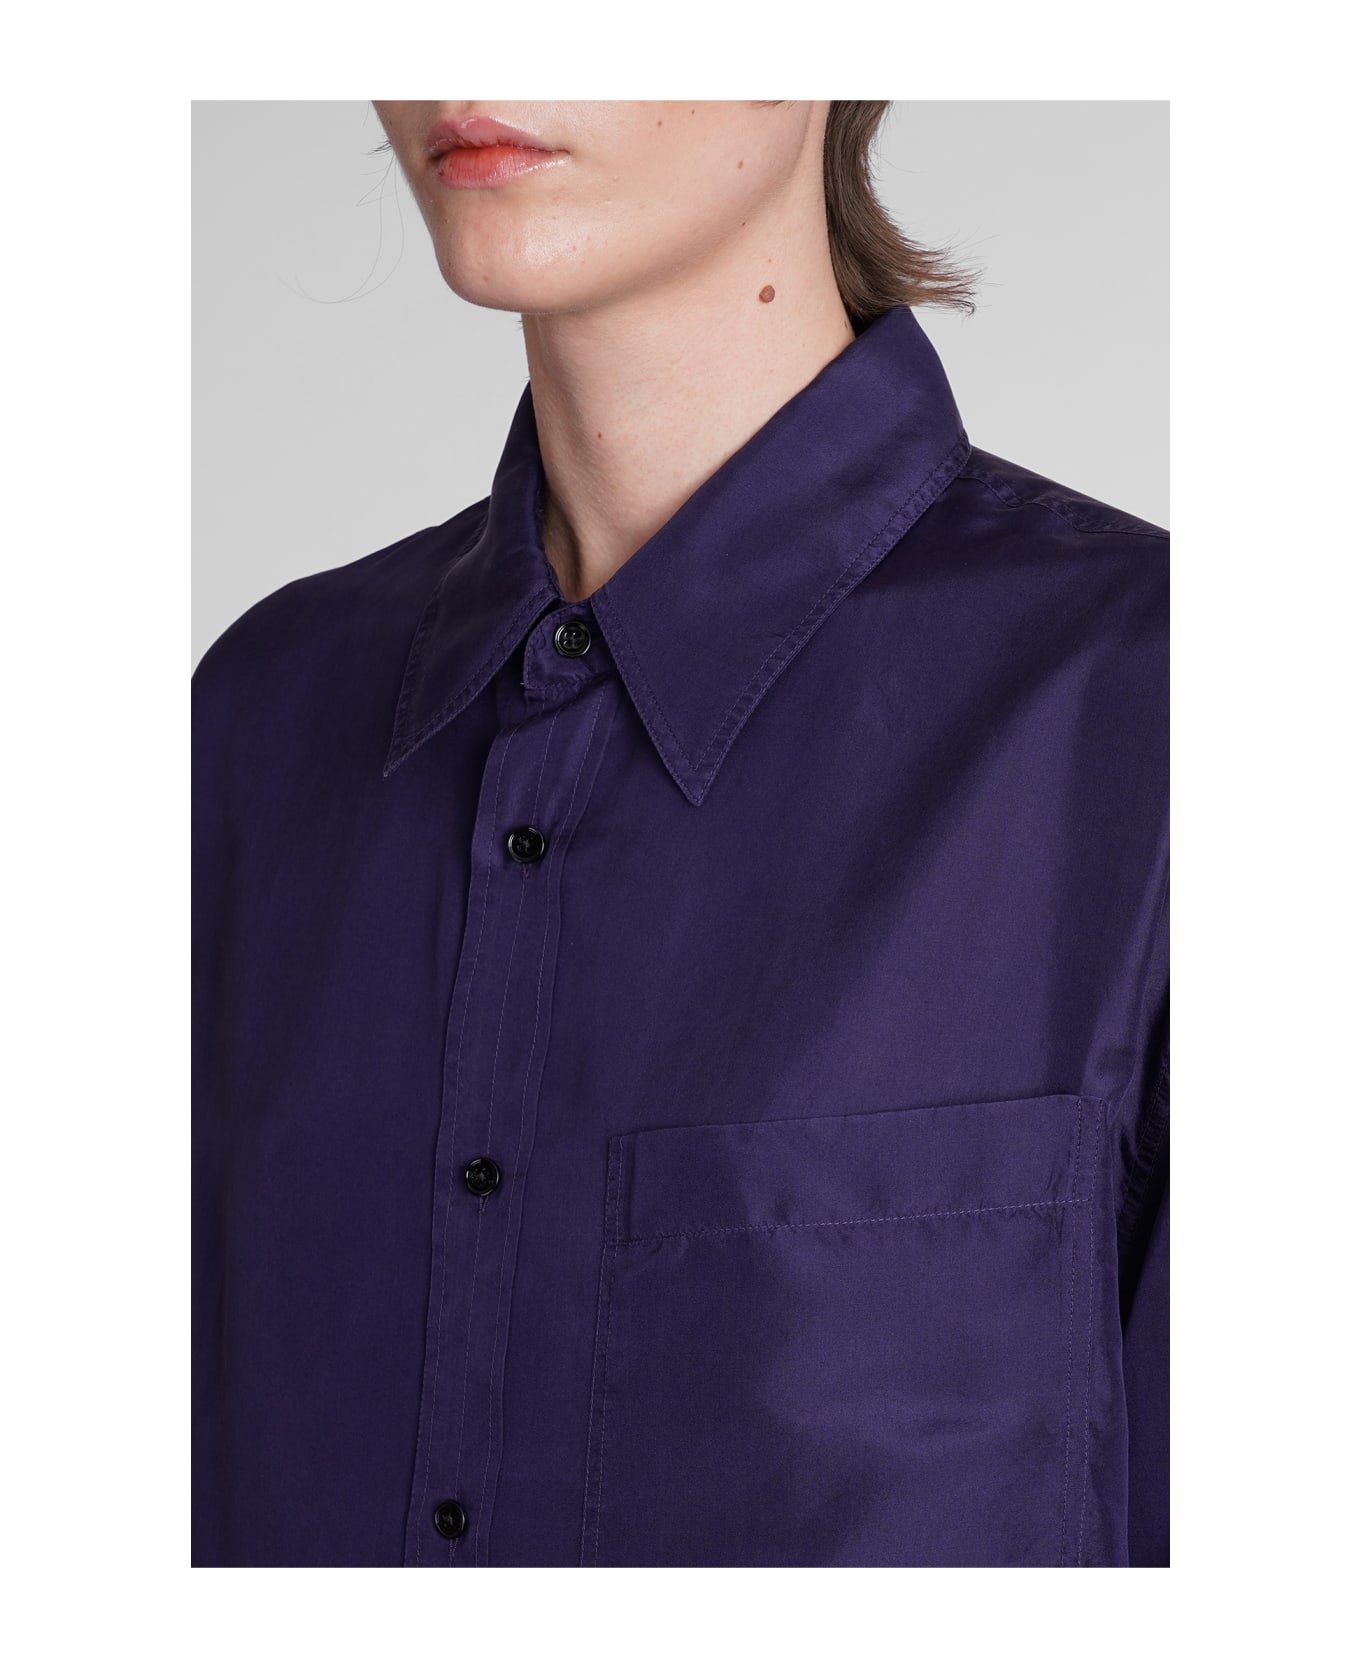 Lemaire Shirt In Viola Silk - Viola